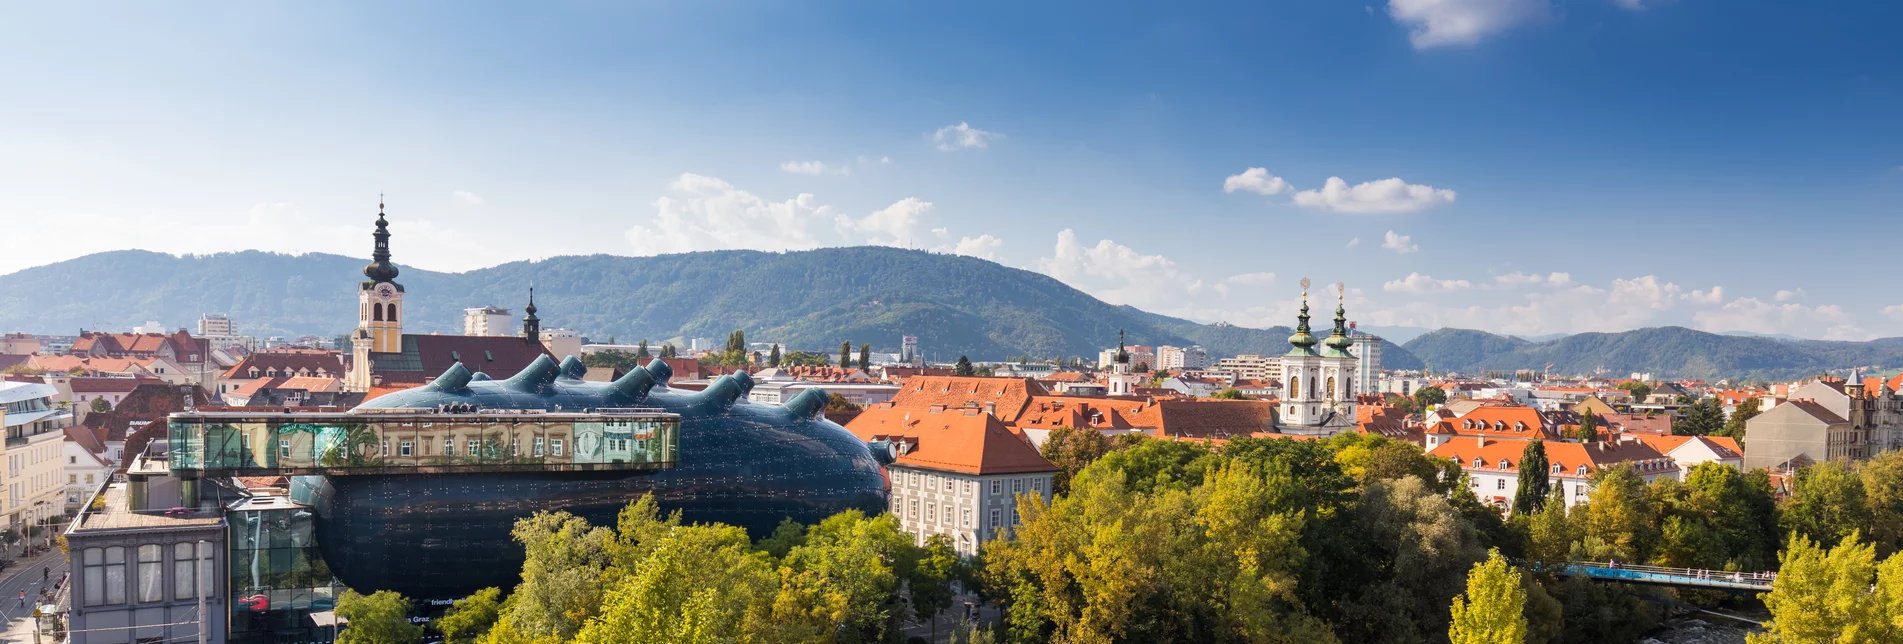 City of Graz | © Graz Tourismus | Harry Schiffer